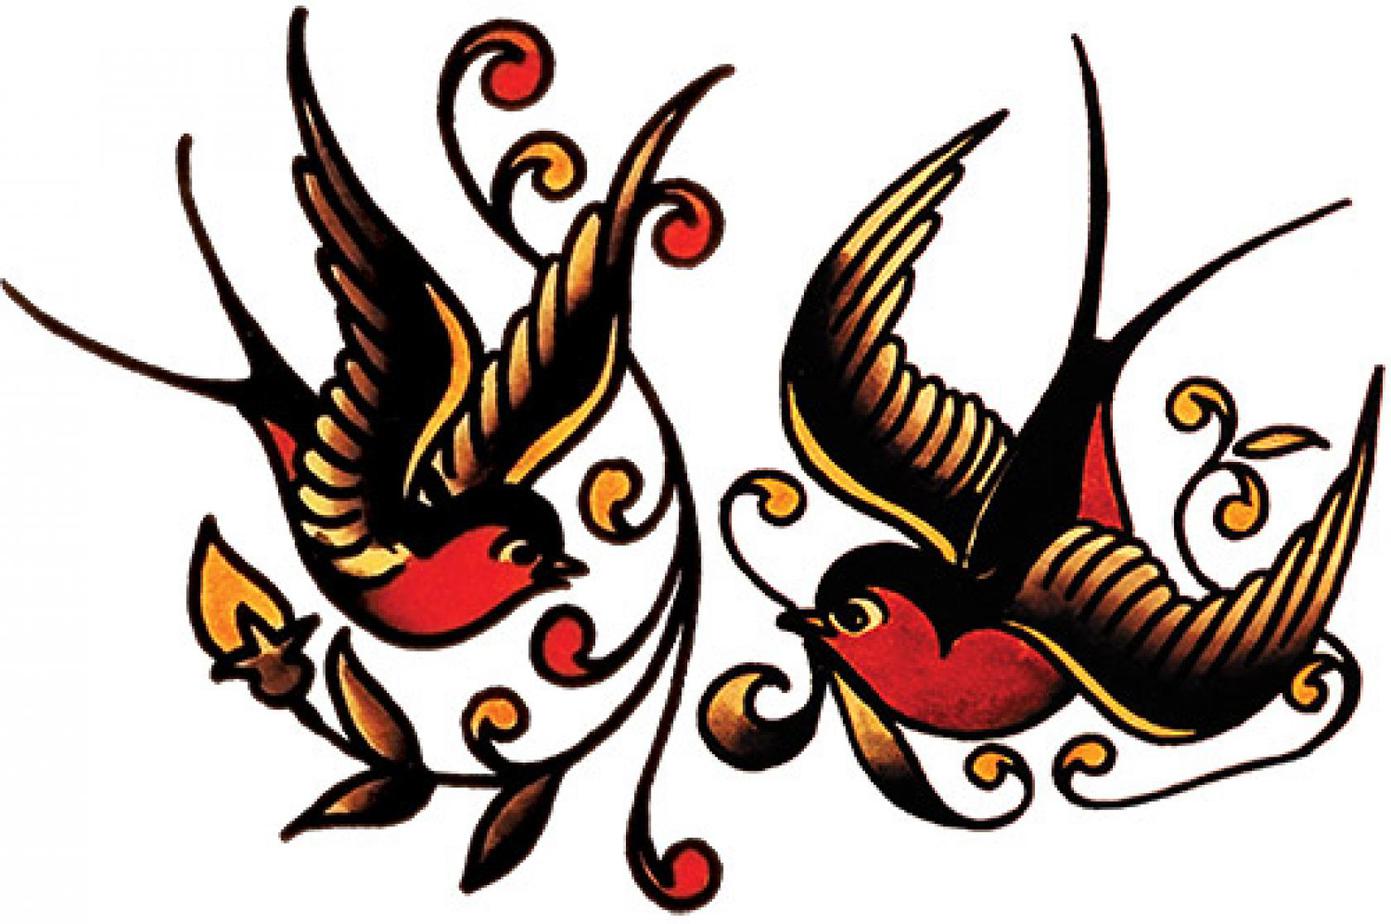 Dragon by Topper  Philadelphia Eddies  Traditional Tattoos  Last Sparrow  Tattoo